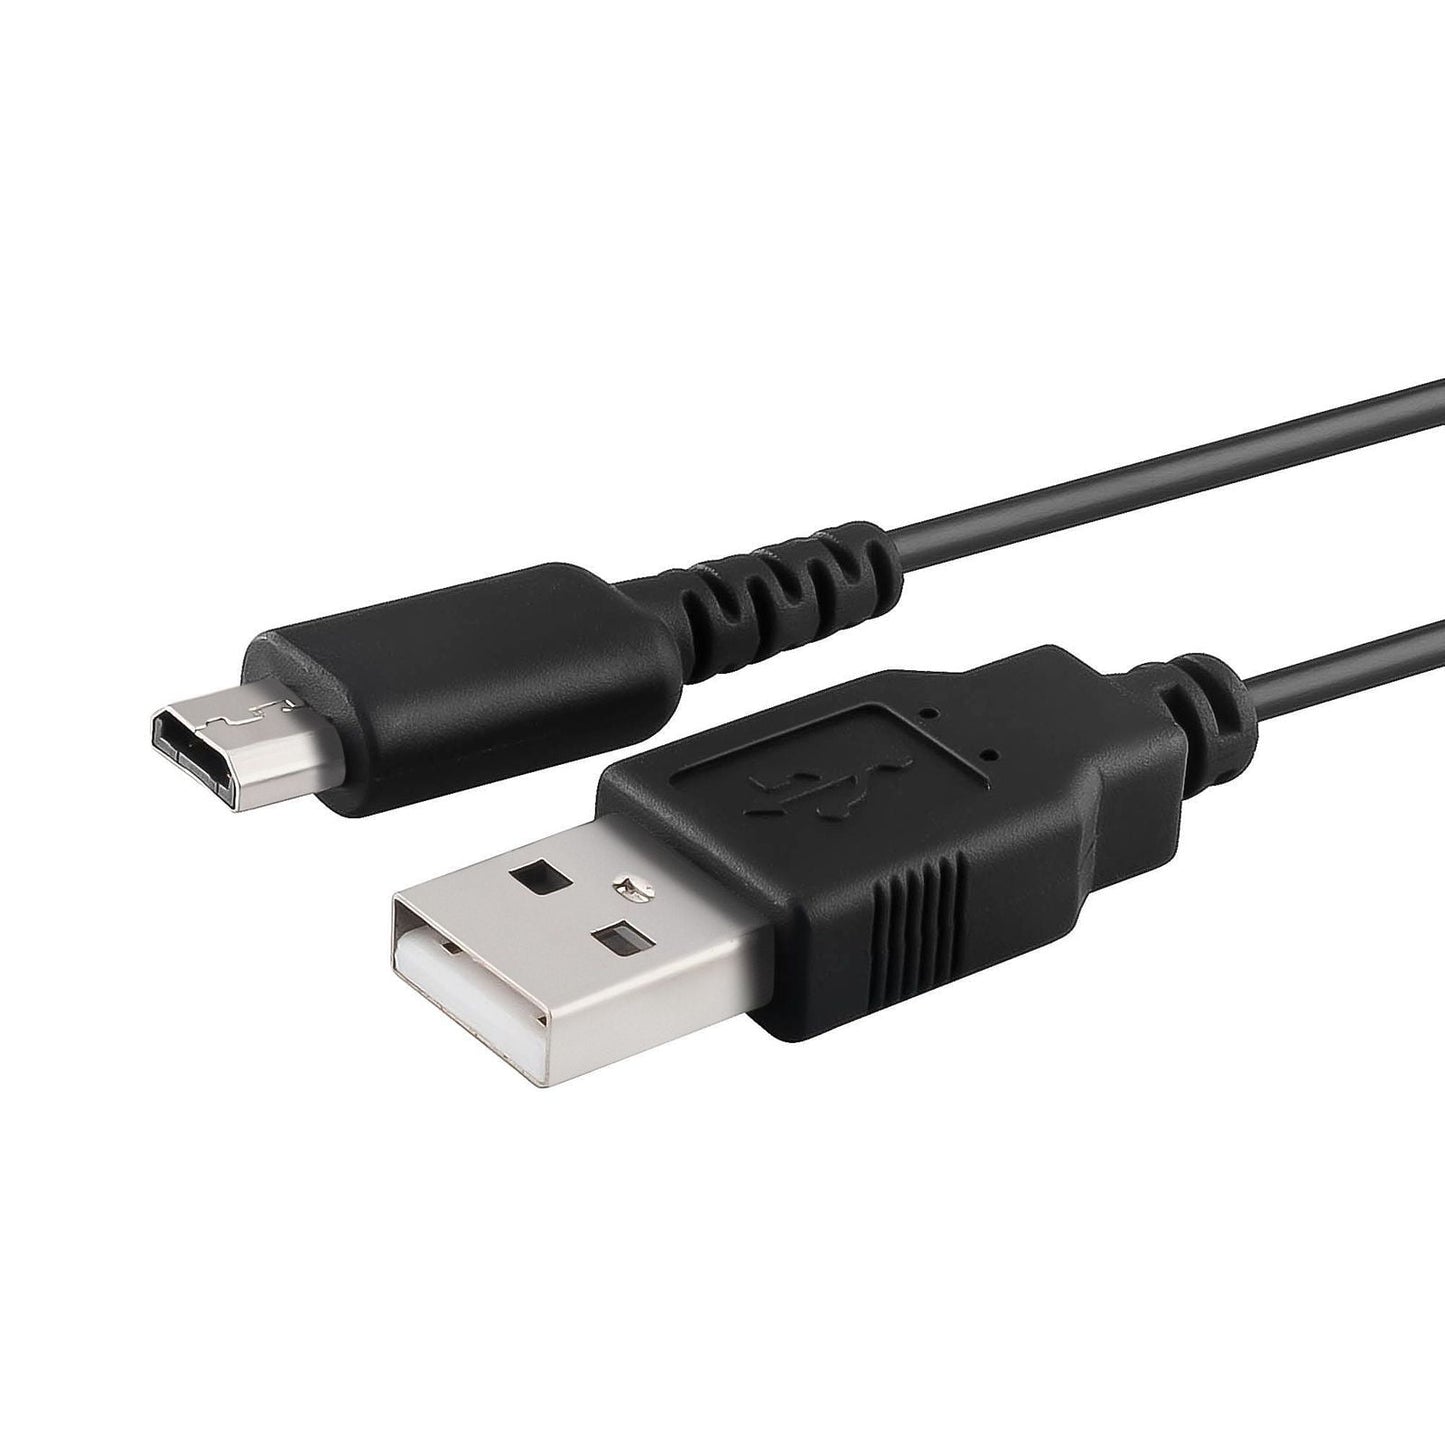 Cable de carga USB DS Lite (Tomee)